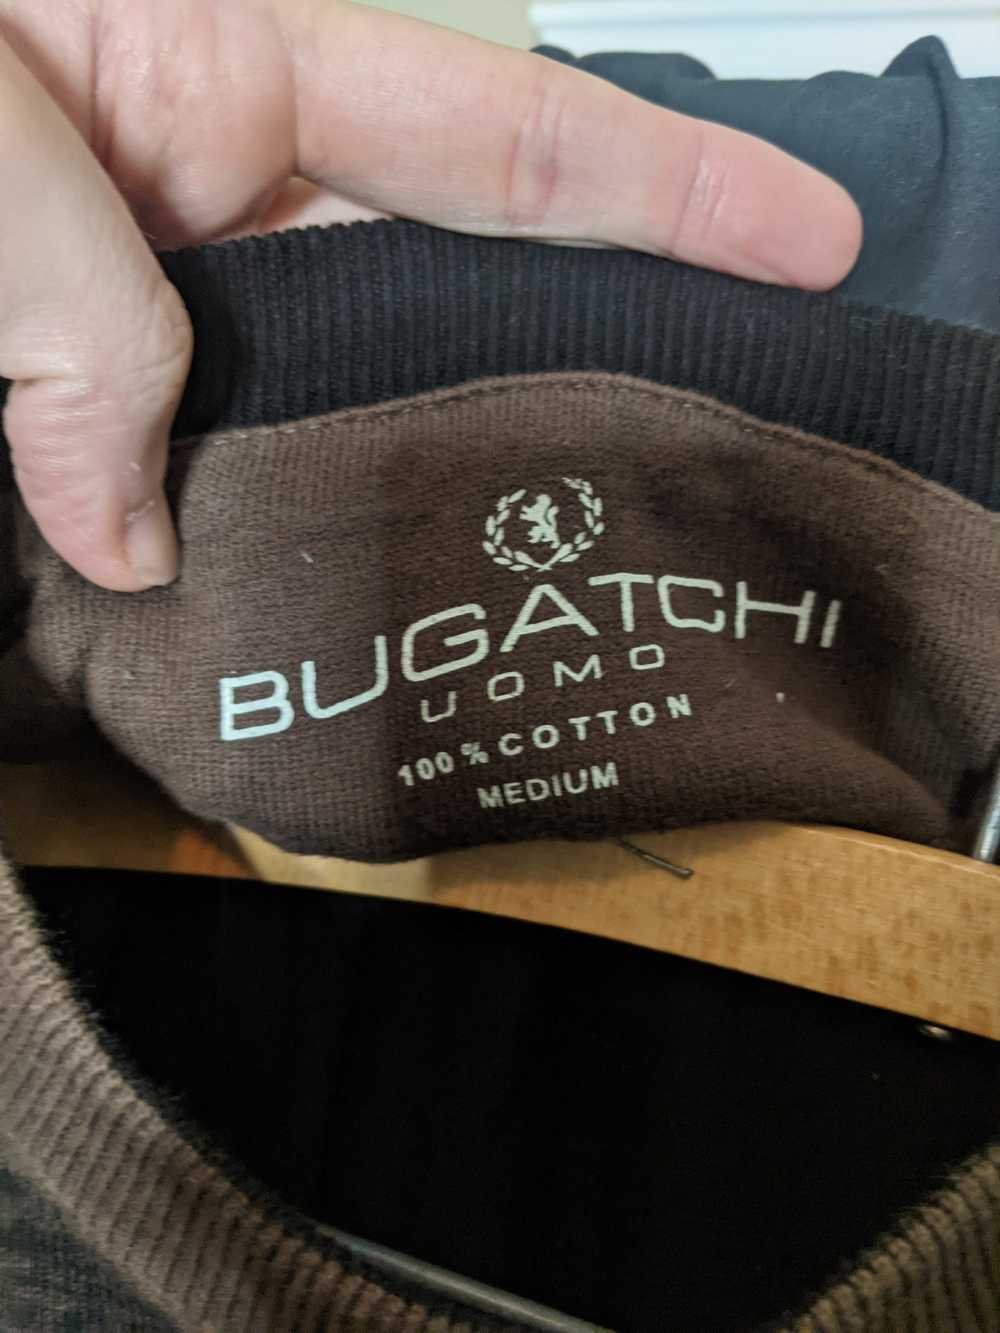 Bugatchi Brushed brown cotton sweater - image 3